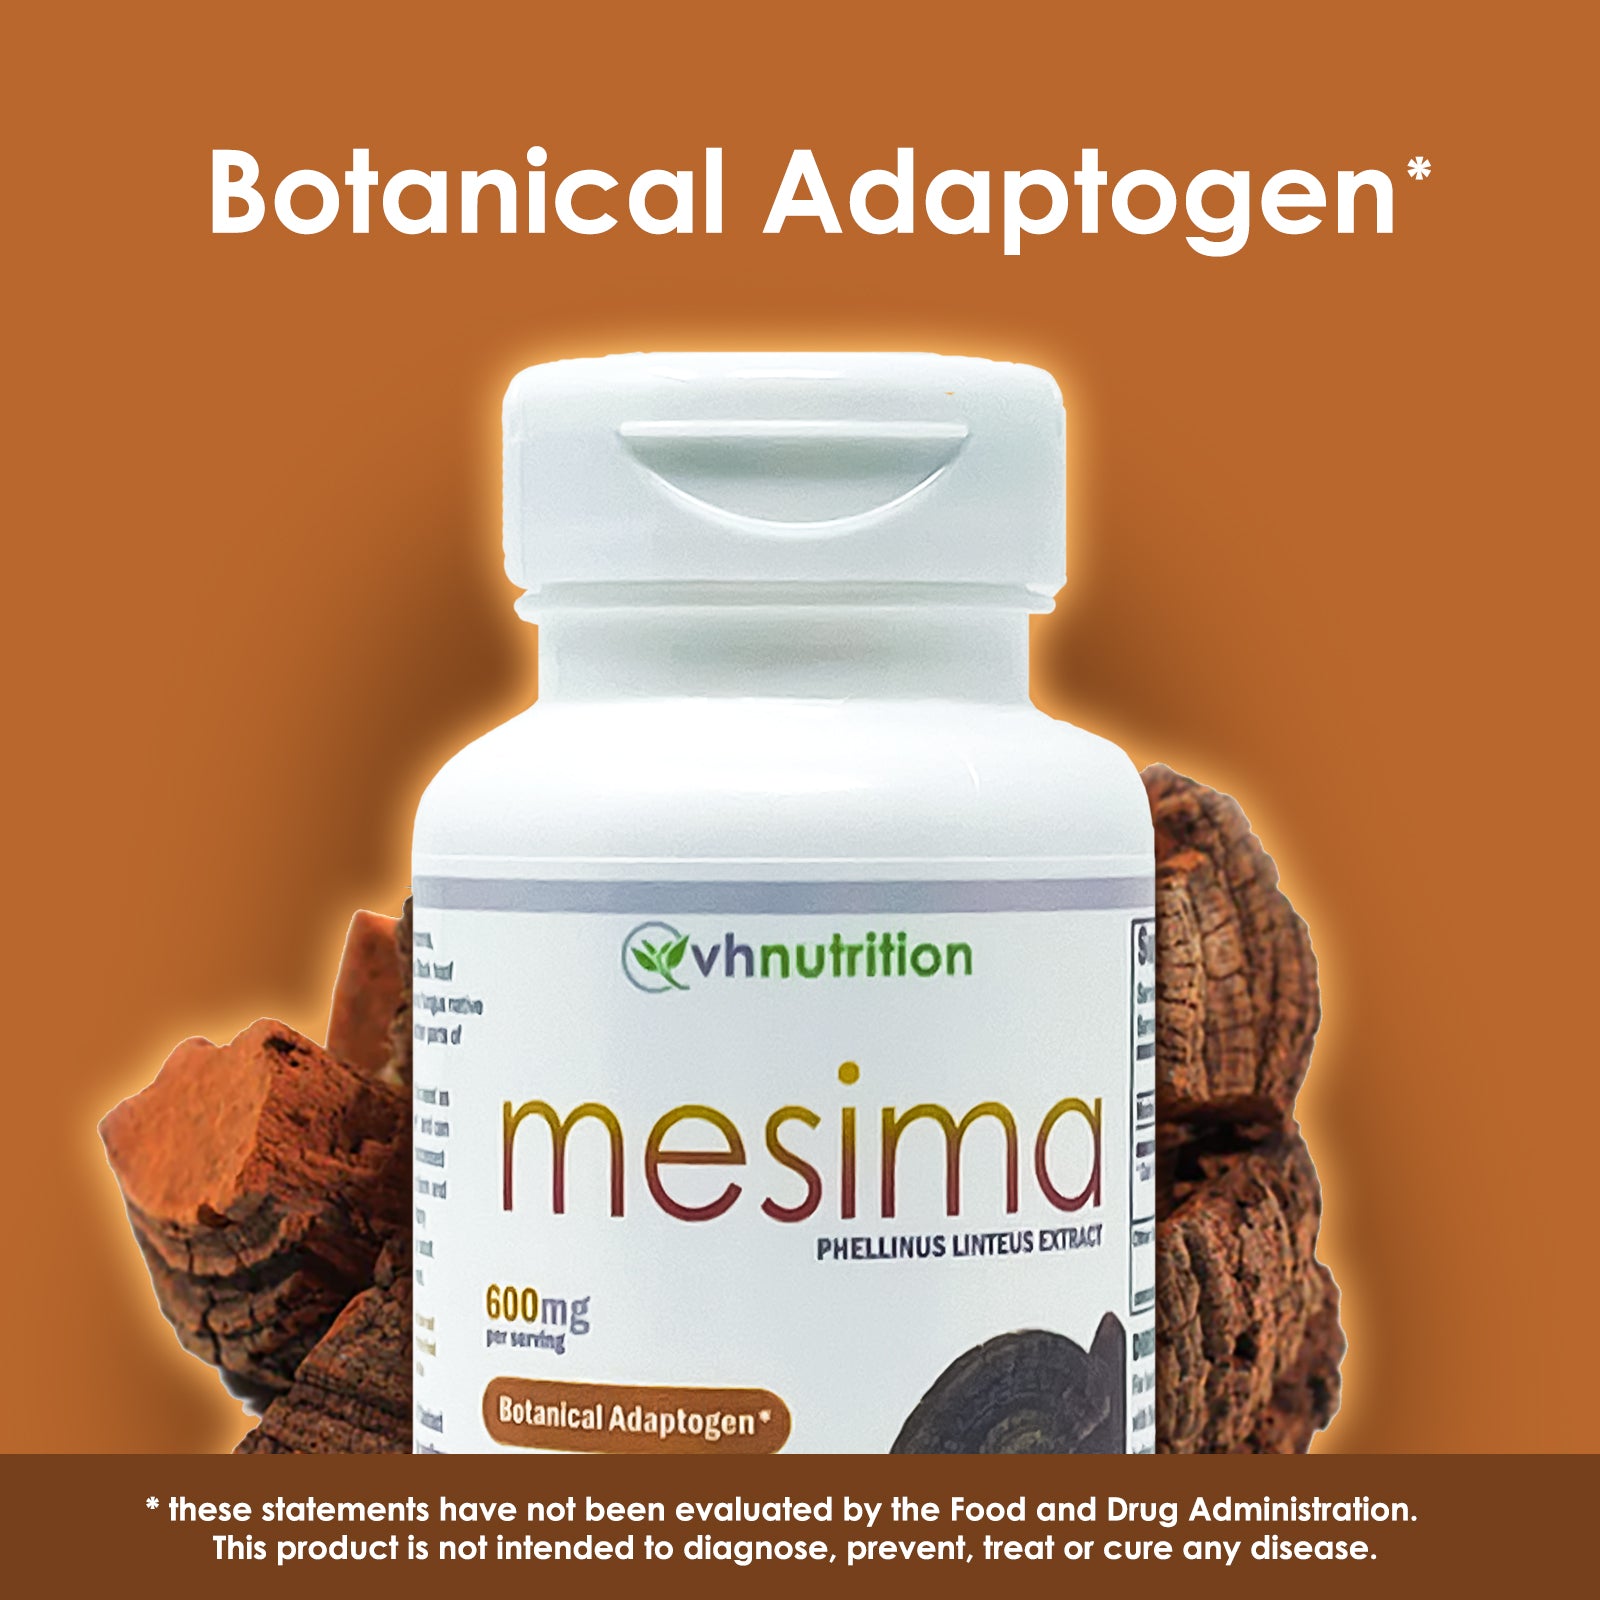 VH Nutrition MESIMA MUSHROOM | Botanical Adaptogen and Stress & Immune Support Supplement* | 600mg Per Serving | Standardized Phellinus linteus Extract Powder | 60 Capsules